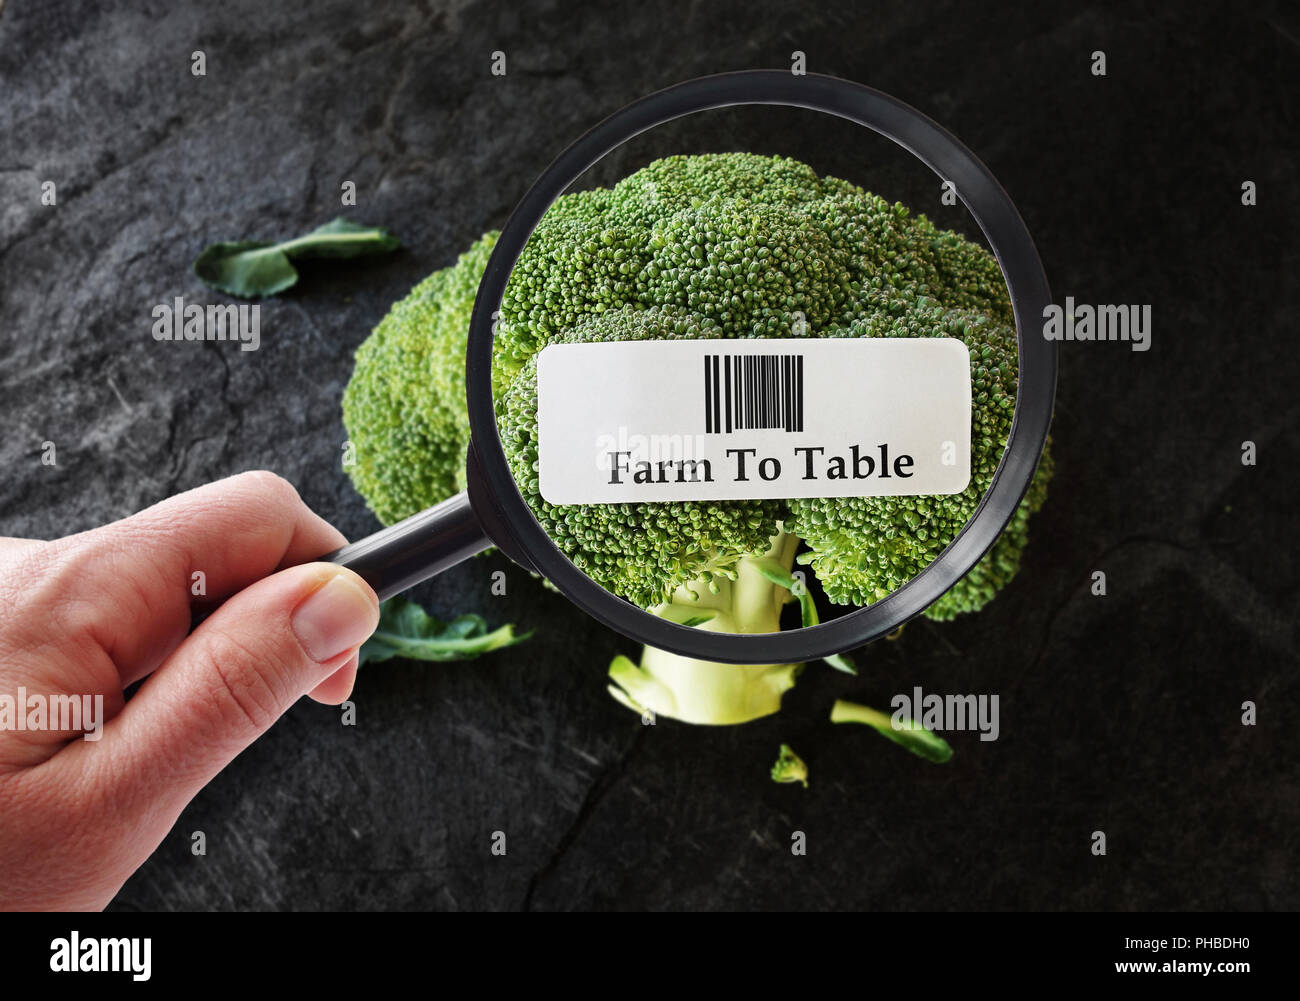 Farm to table concept Stock Photo